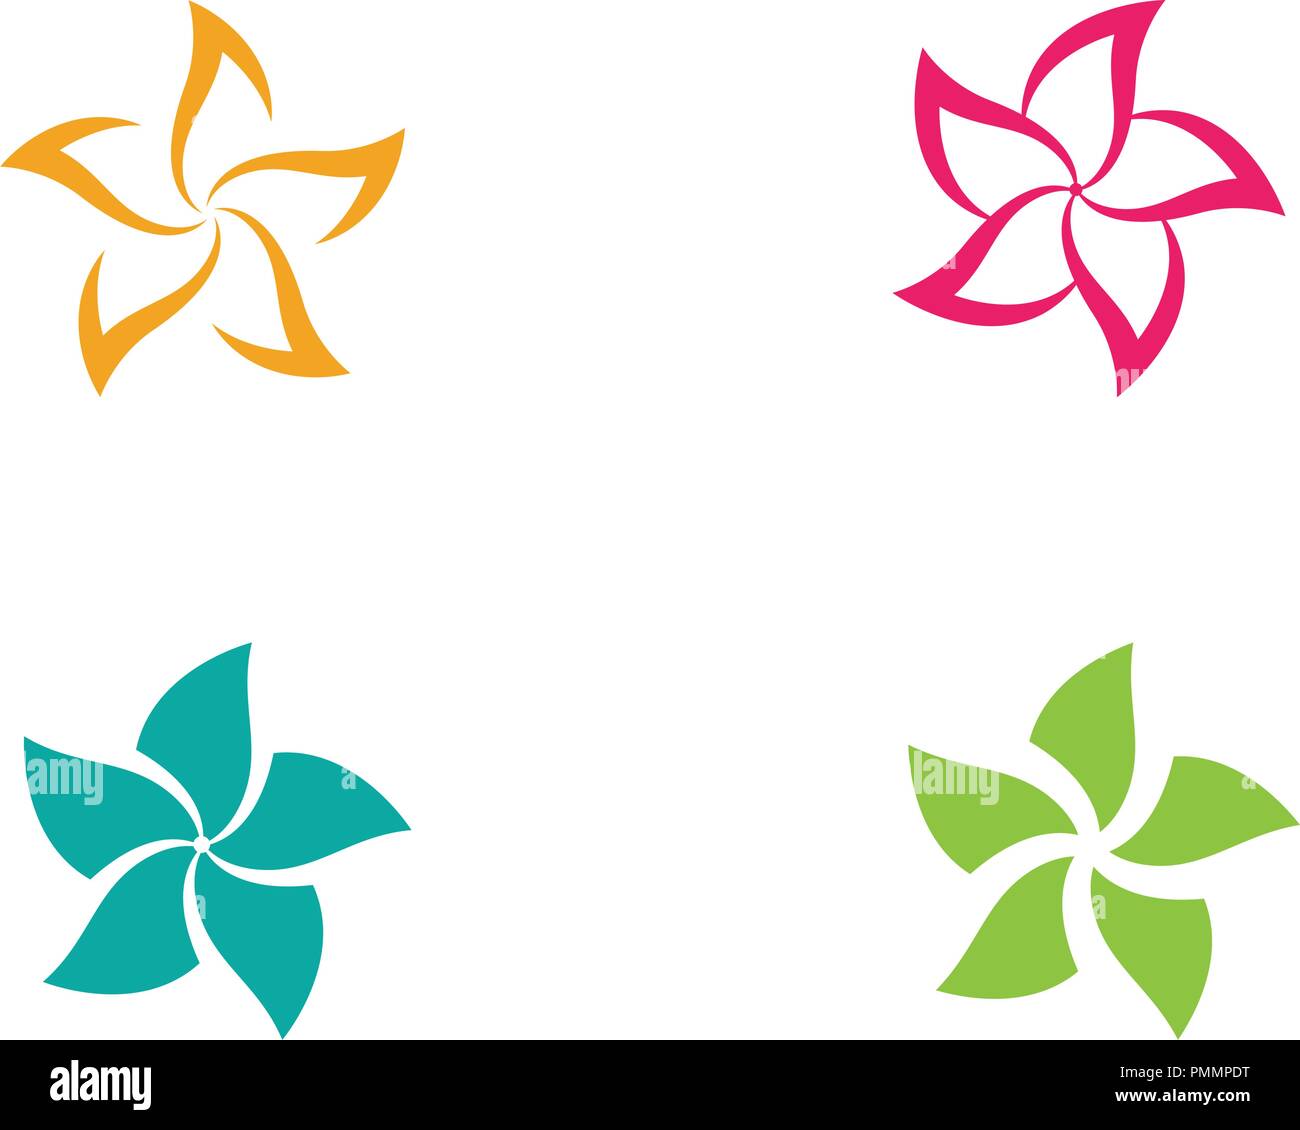 Schonheit Plumeria Symbol Blumen Design Illustration Vorlage Stock Vektorgrafik Alamy